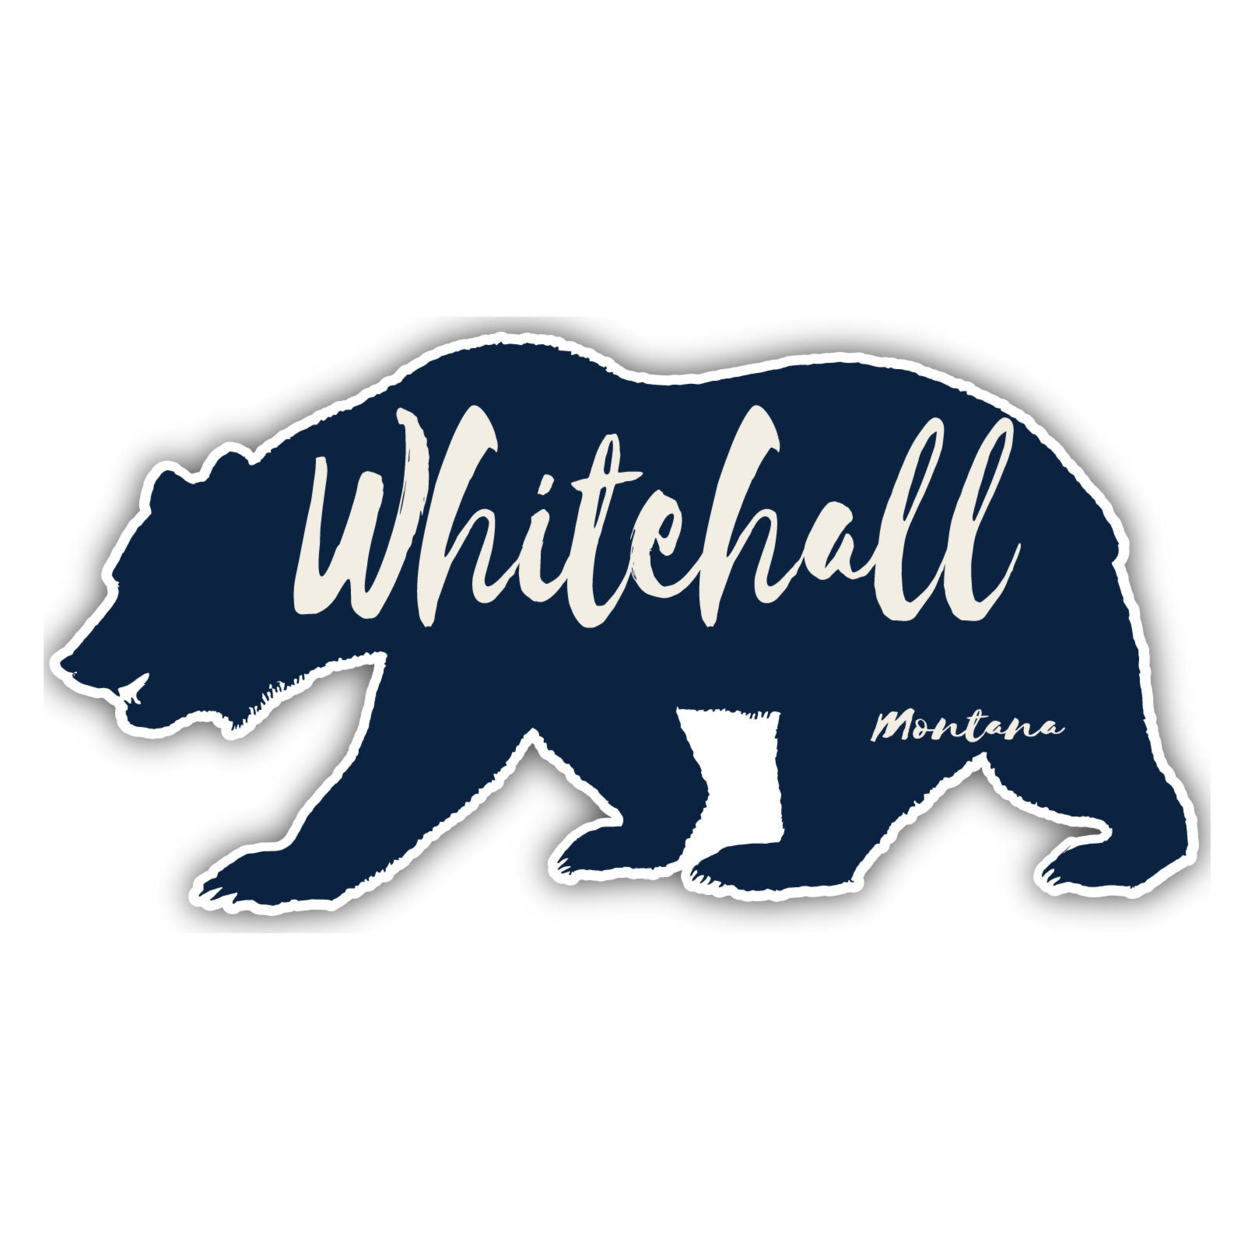 Whitehall Montana Souvenir Decorative Stickers (Choose Theme And Size) - Single Unit, 4-Inch, Bear